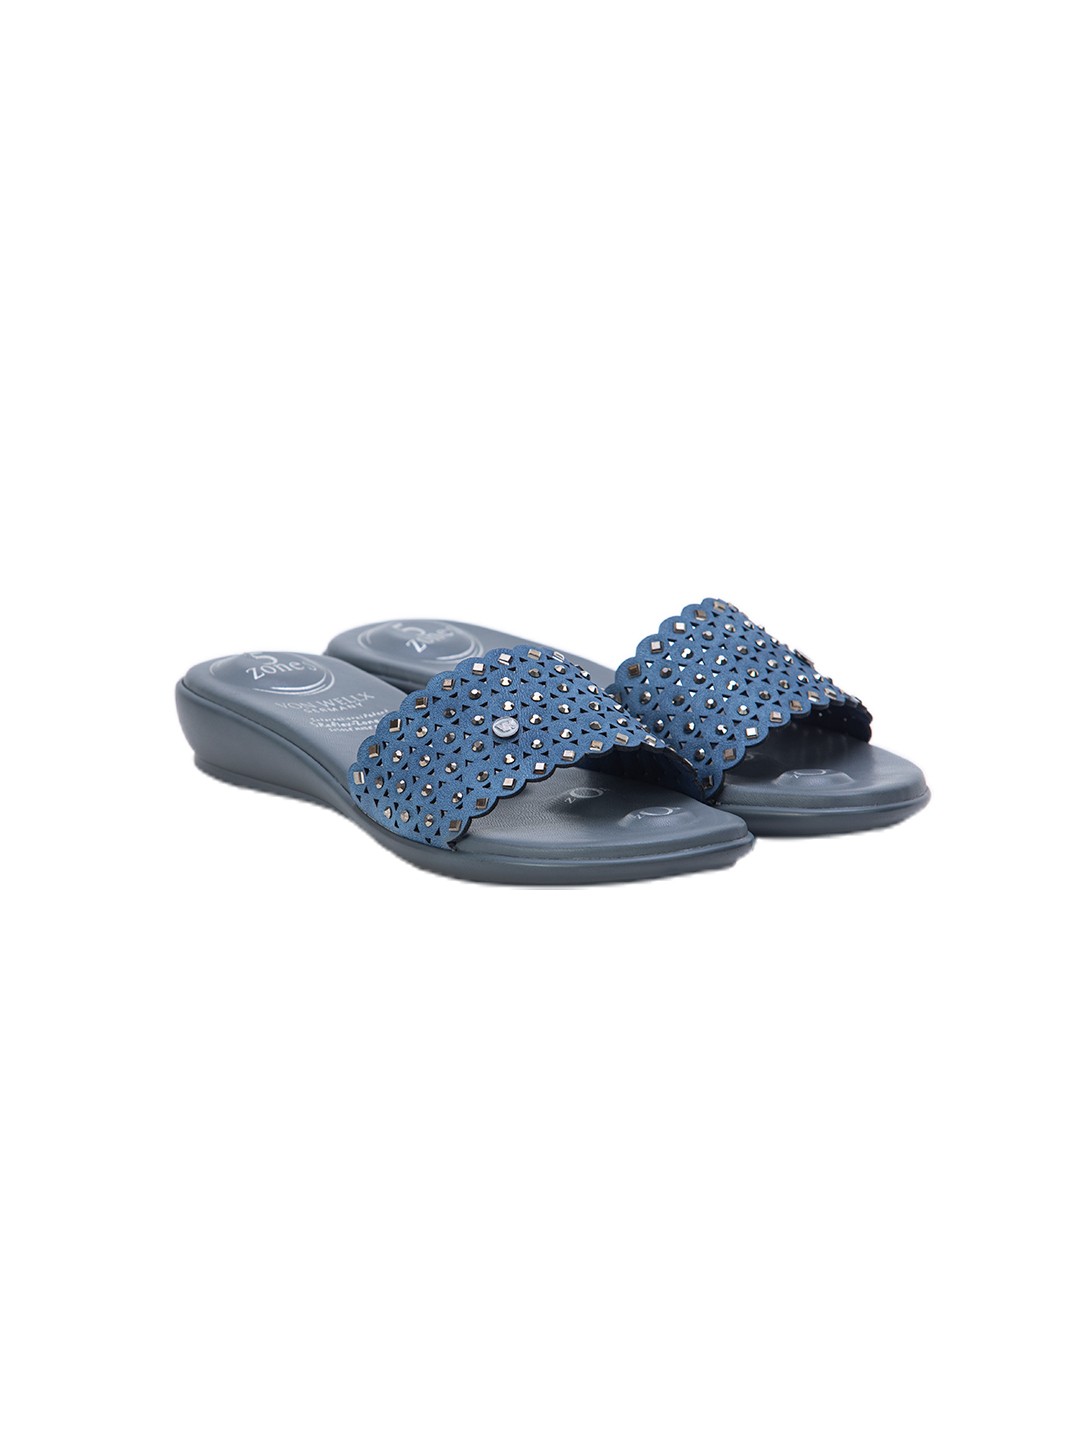 Buy Von Wellx Germany Comfort Vivre Blue Slippers Online in Bangalore